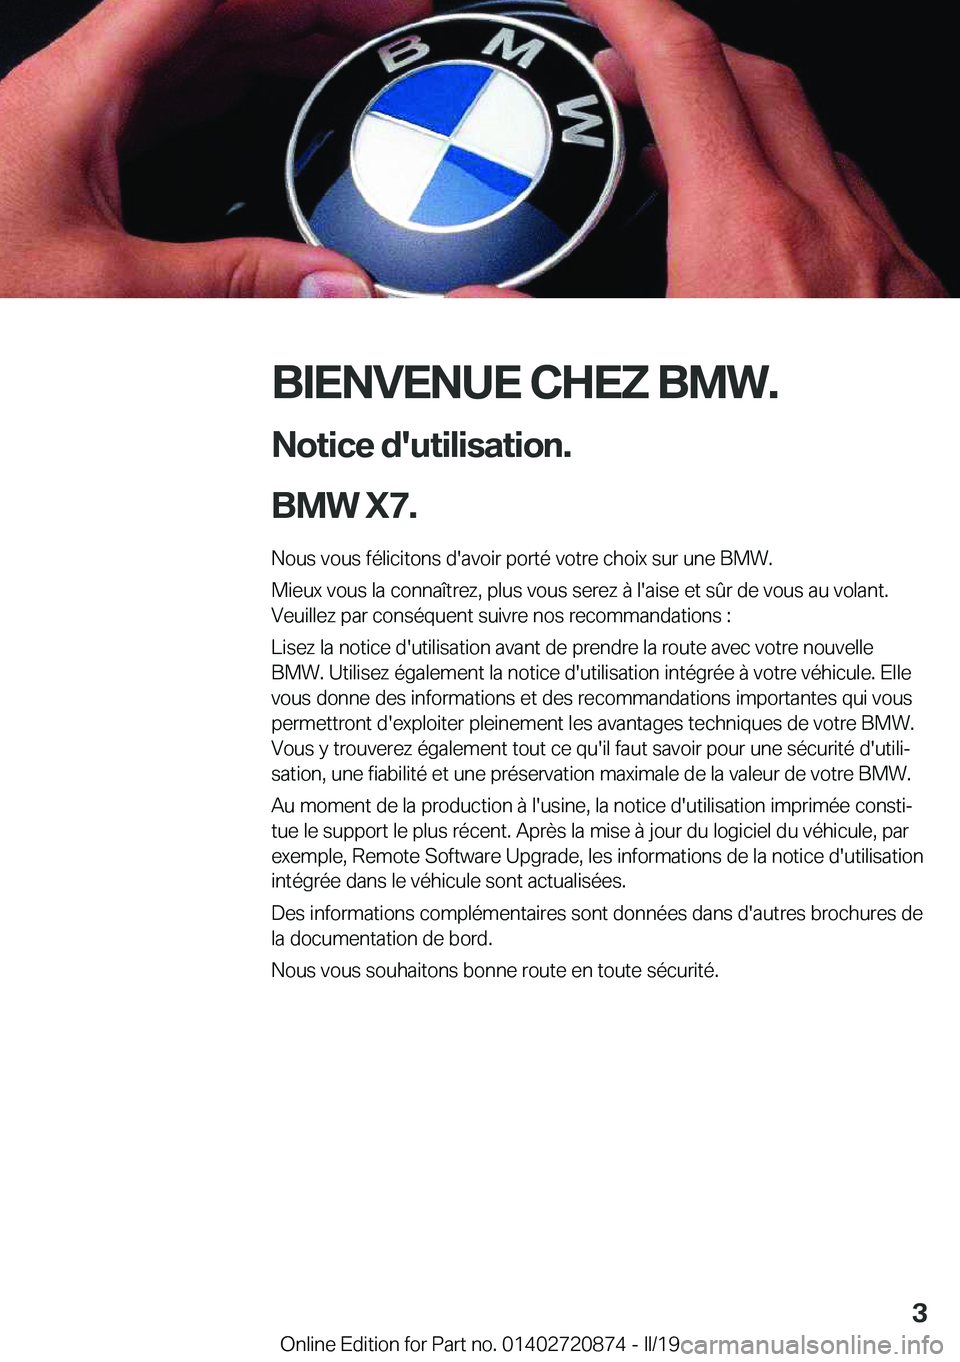 BMW X7 2019  Notices Demploi (in French) �B�I�E�N�V�E�N�U�E��C�H�E�Z��B�M�W�.�N�o�t�i�c�e��d�'�u�t�i�l�i�s�a�t�i�o�n�.
�B�M�W��X�7�. �N�o�u�s��v�o�u�s��f�é�l�i�c�i�t�o�n�s��d�'�a�v�o�i�r��p�o�r�t�é��v�o�t�r�e��c�h�o�i�x�